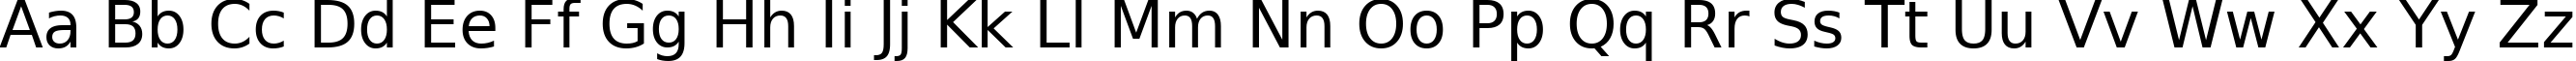 Пример написания английского алфавита шрифтом ae_Nice